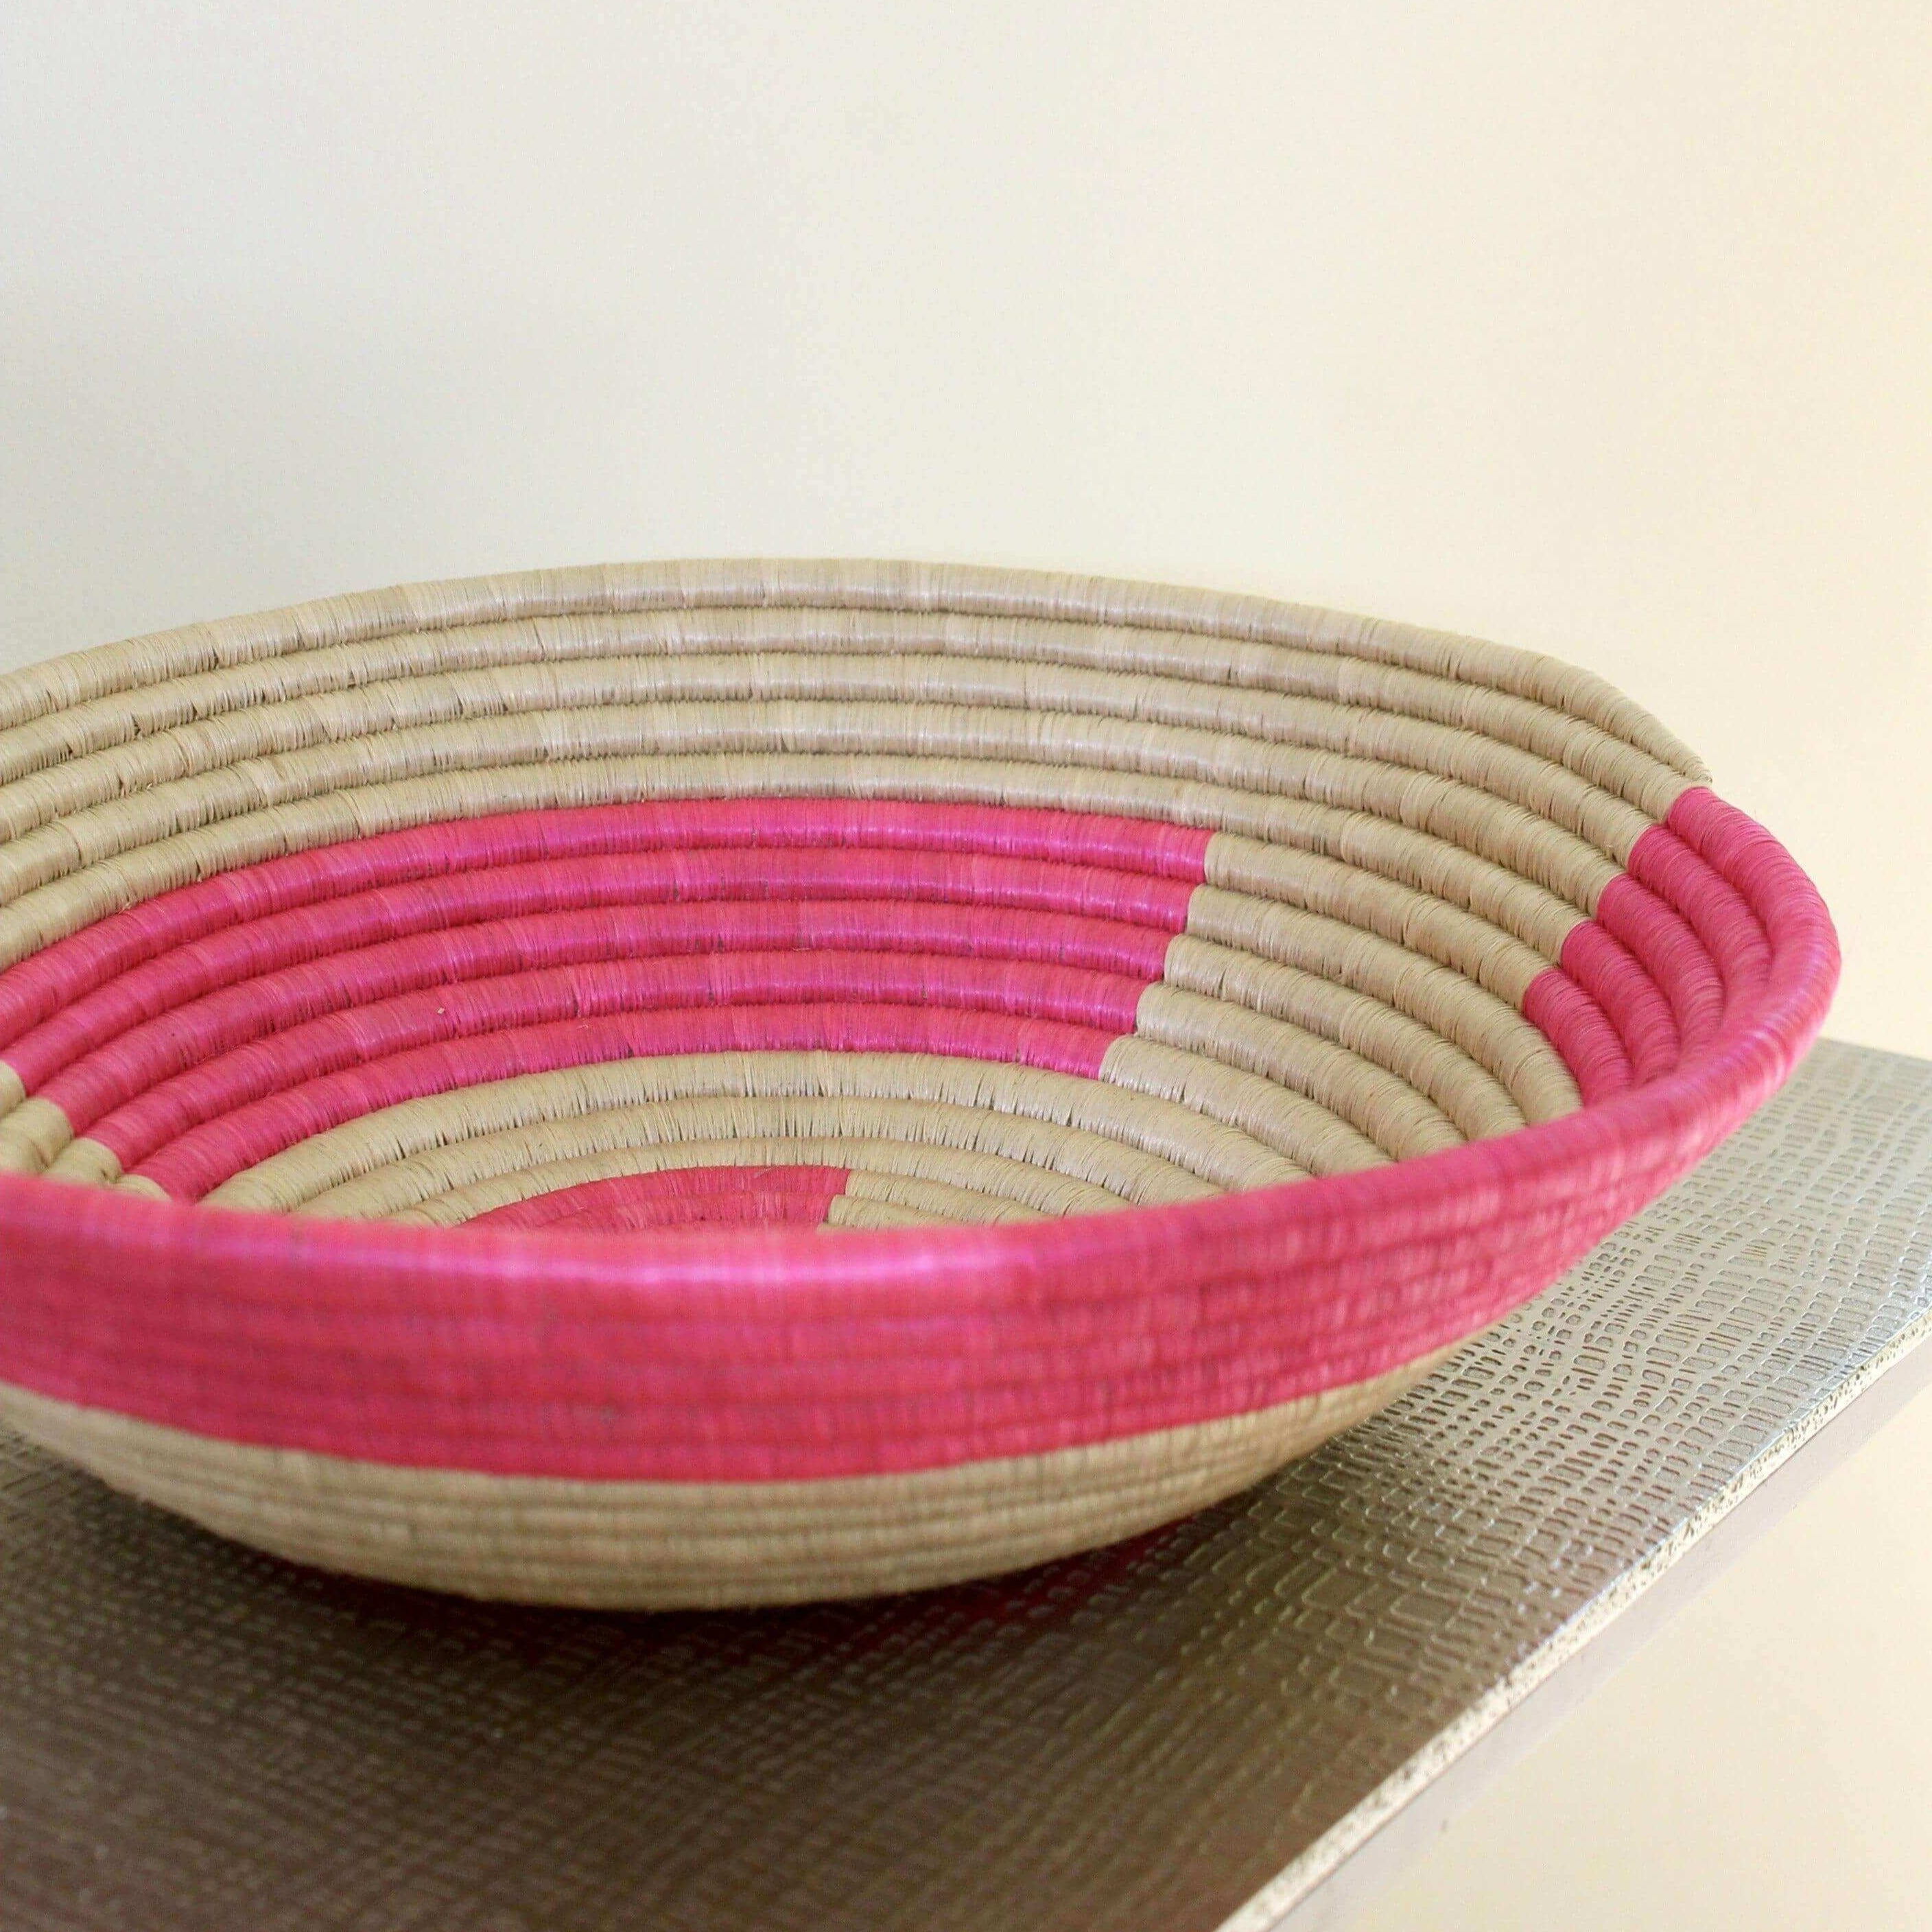 Pink seagrass basket bowl from Rwanda